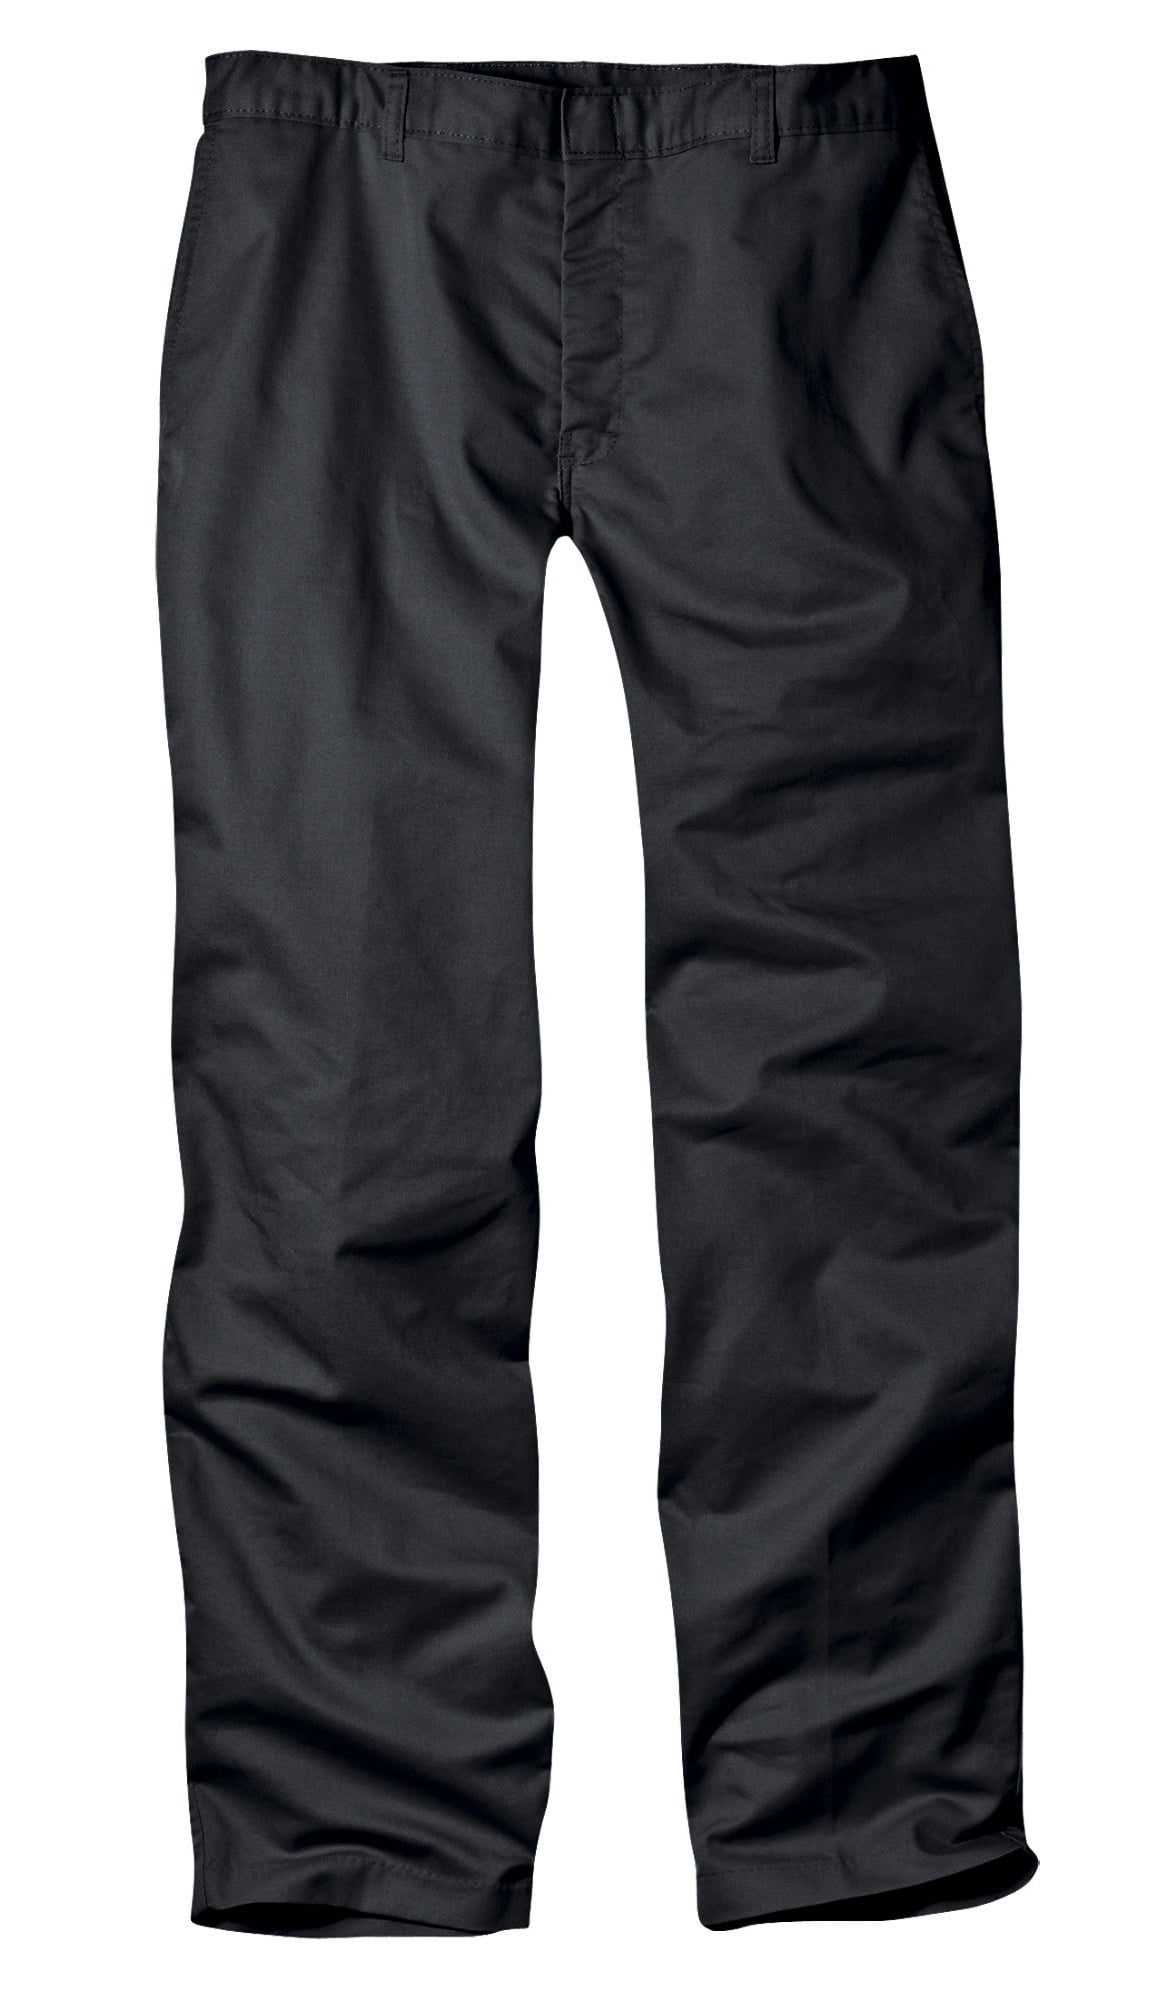 dickies men's young adult sized flat front pant, black, 31x32 - Walmart.com